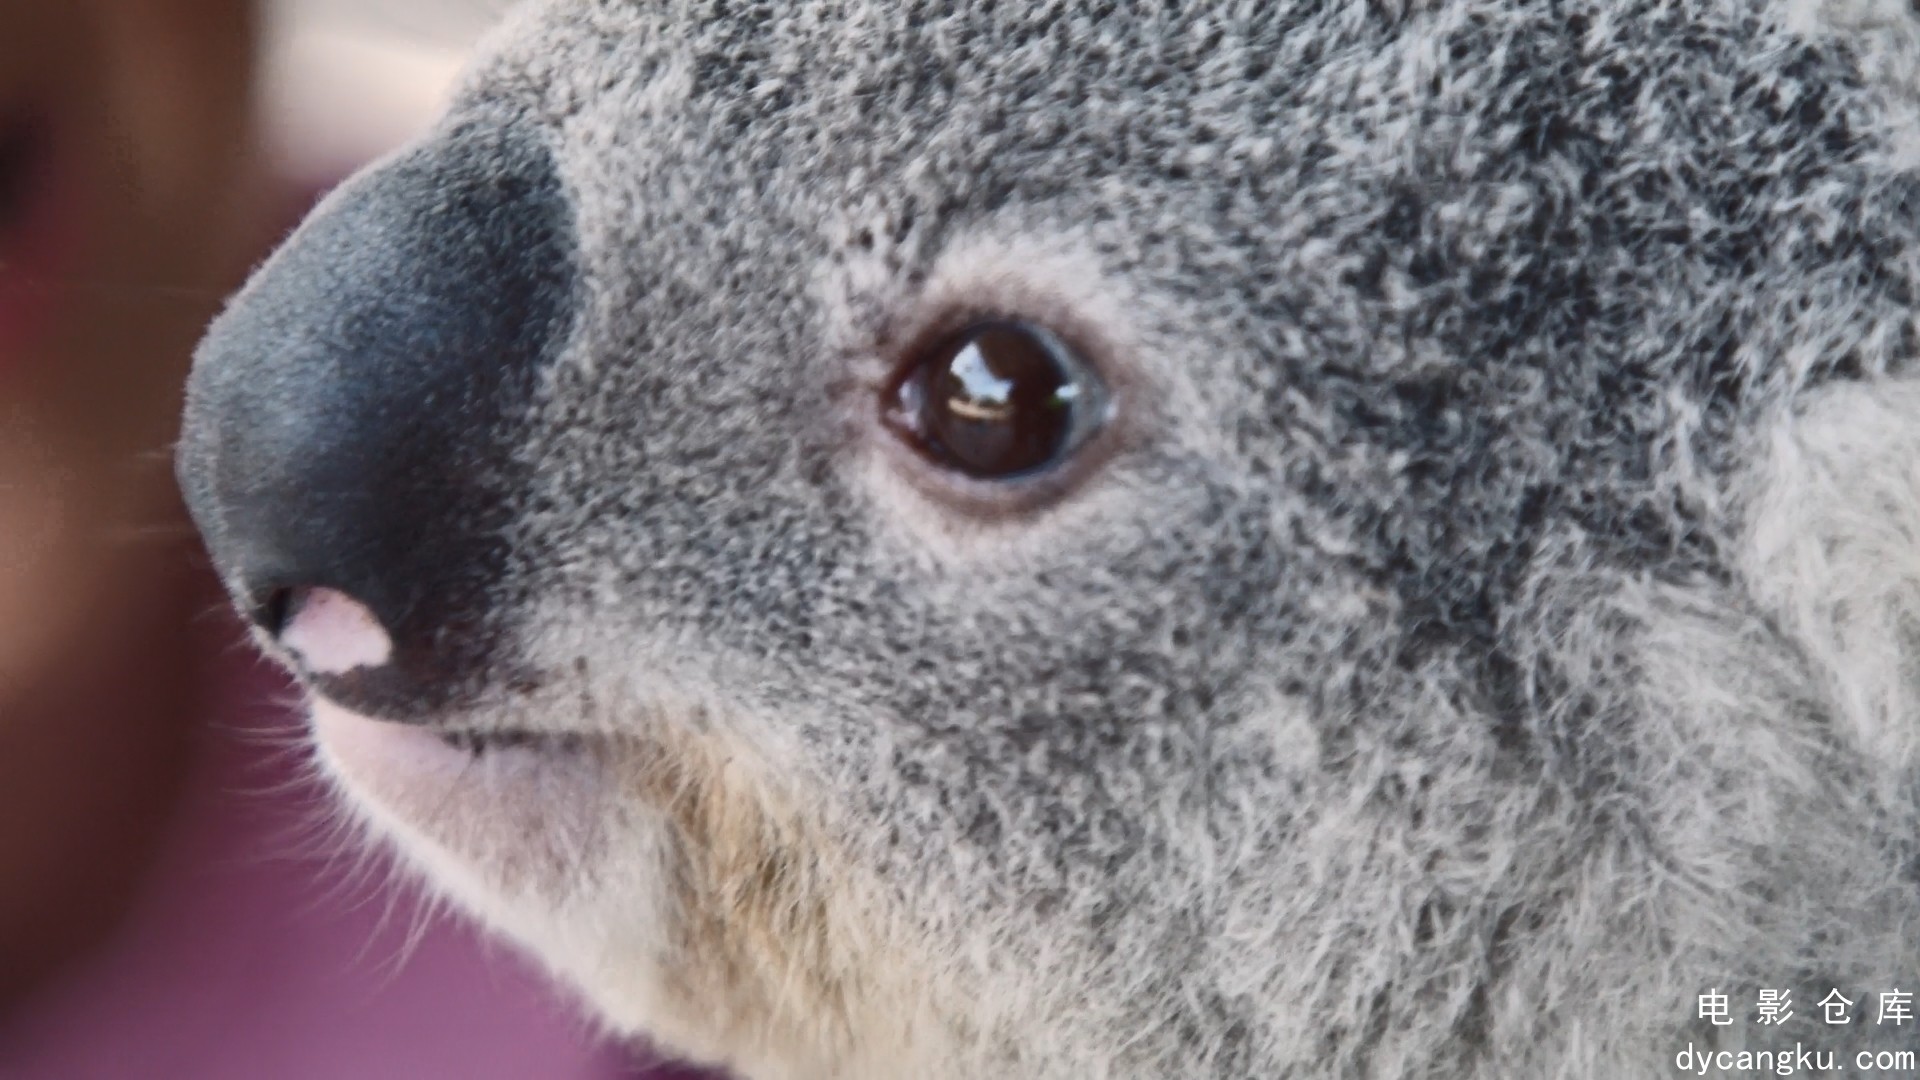 [电影仓库dycangku.com]Izzys.Koala.World.S01E08.1080p.NF.WEB-DL.DDP5.1.H.264.mkv_.jpg